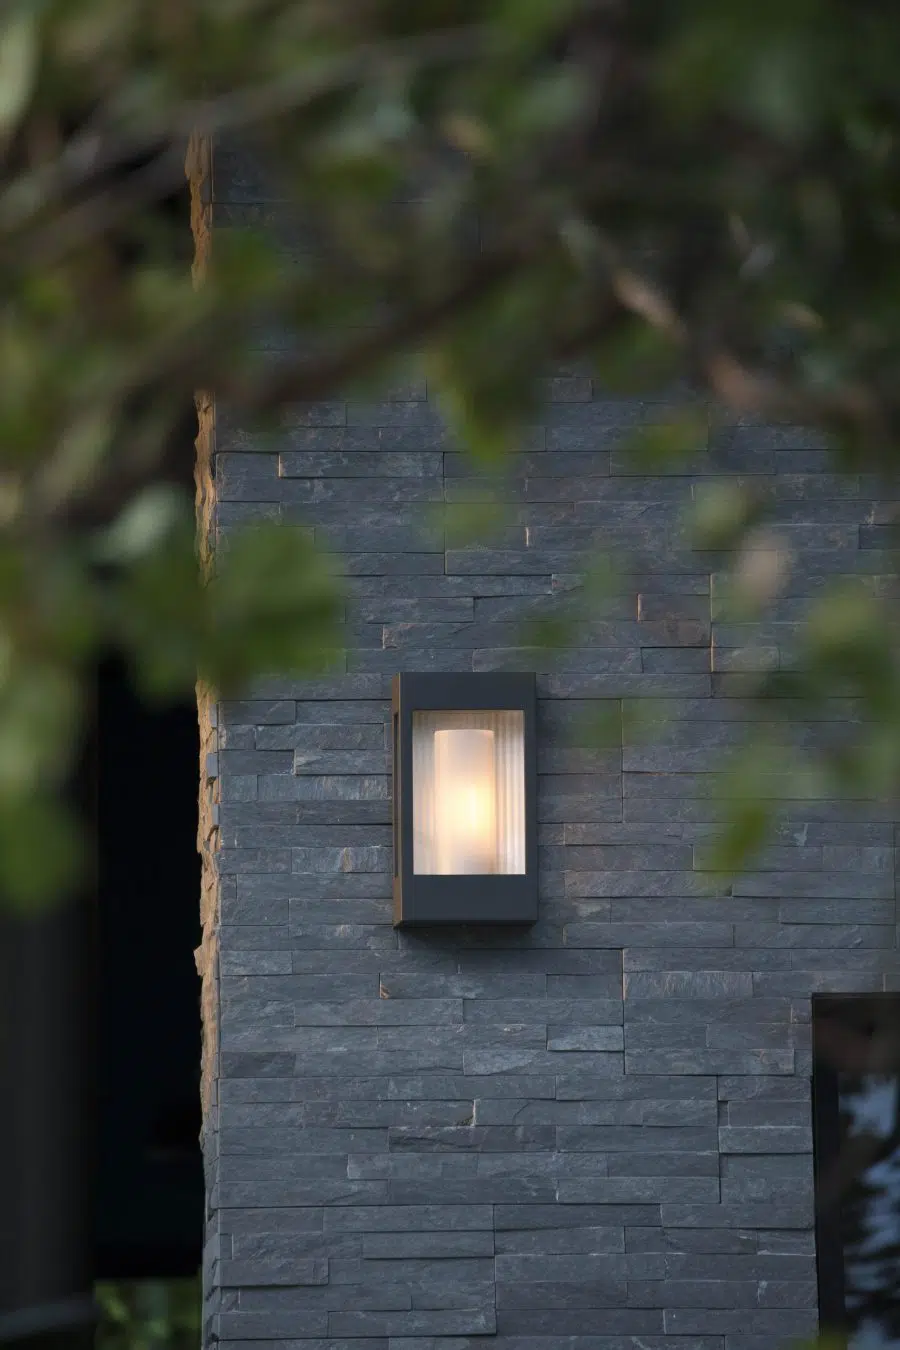 Brick wandlamp roger pradier buitenlamp tuinextra kaatsheuvel